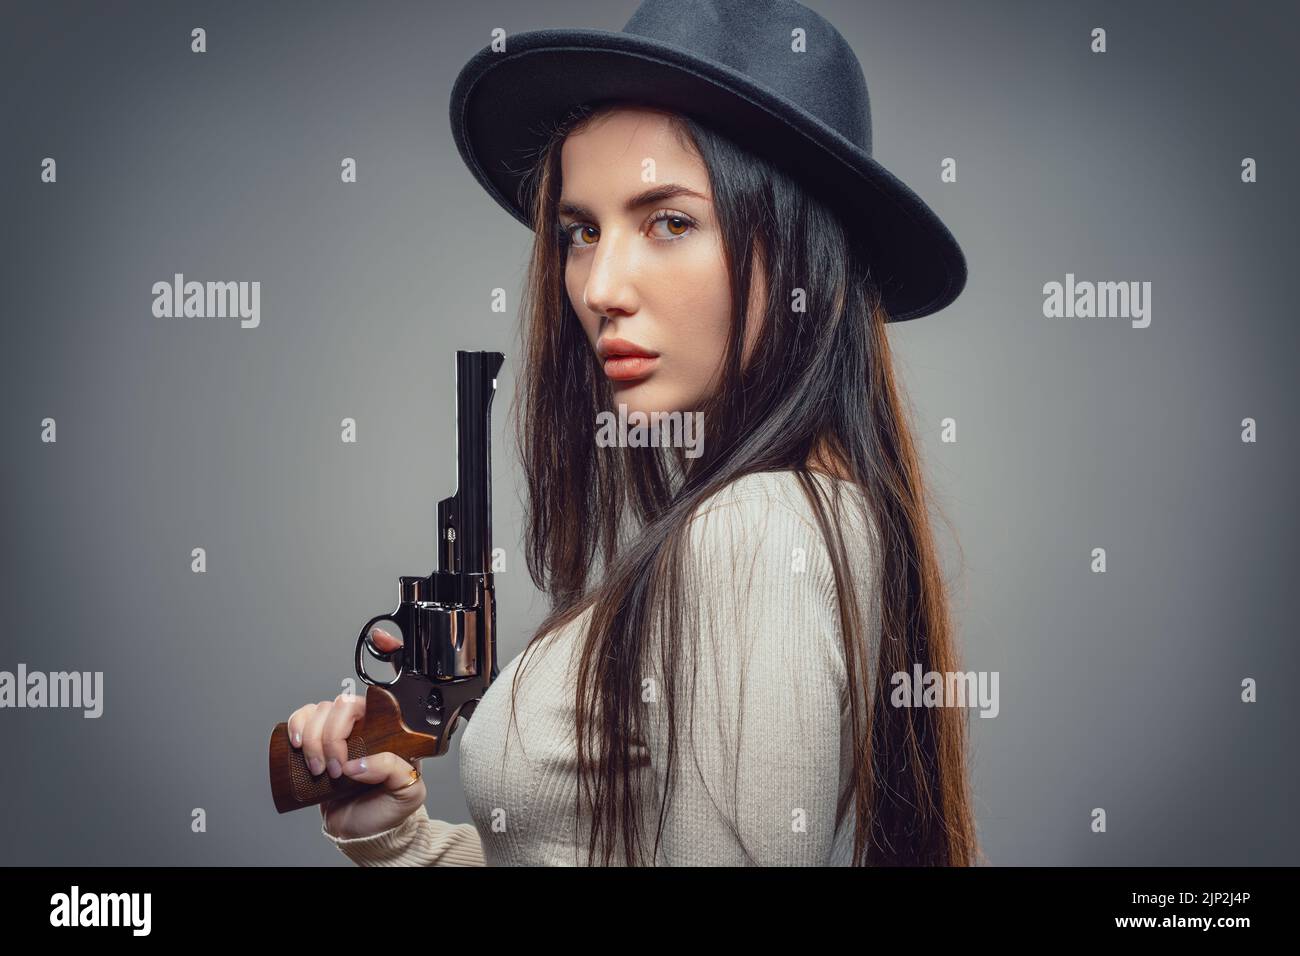 woman, hazardous, revolver, revolverheldin, female, ladies, lady, women, dangerous, revolvers Stock Photo